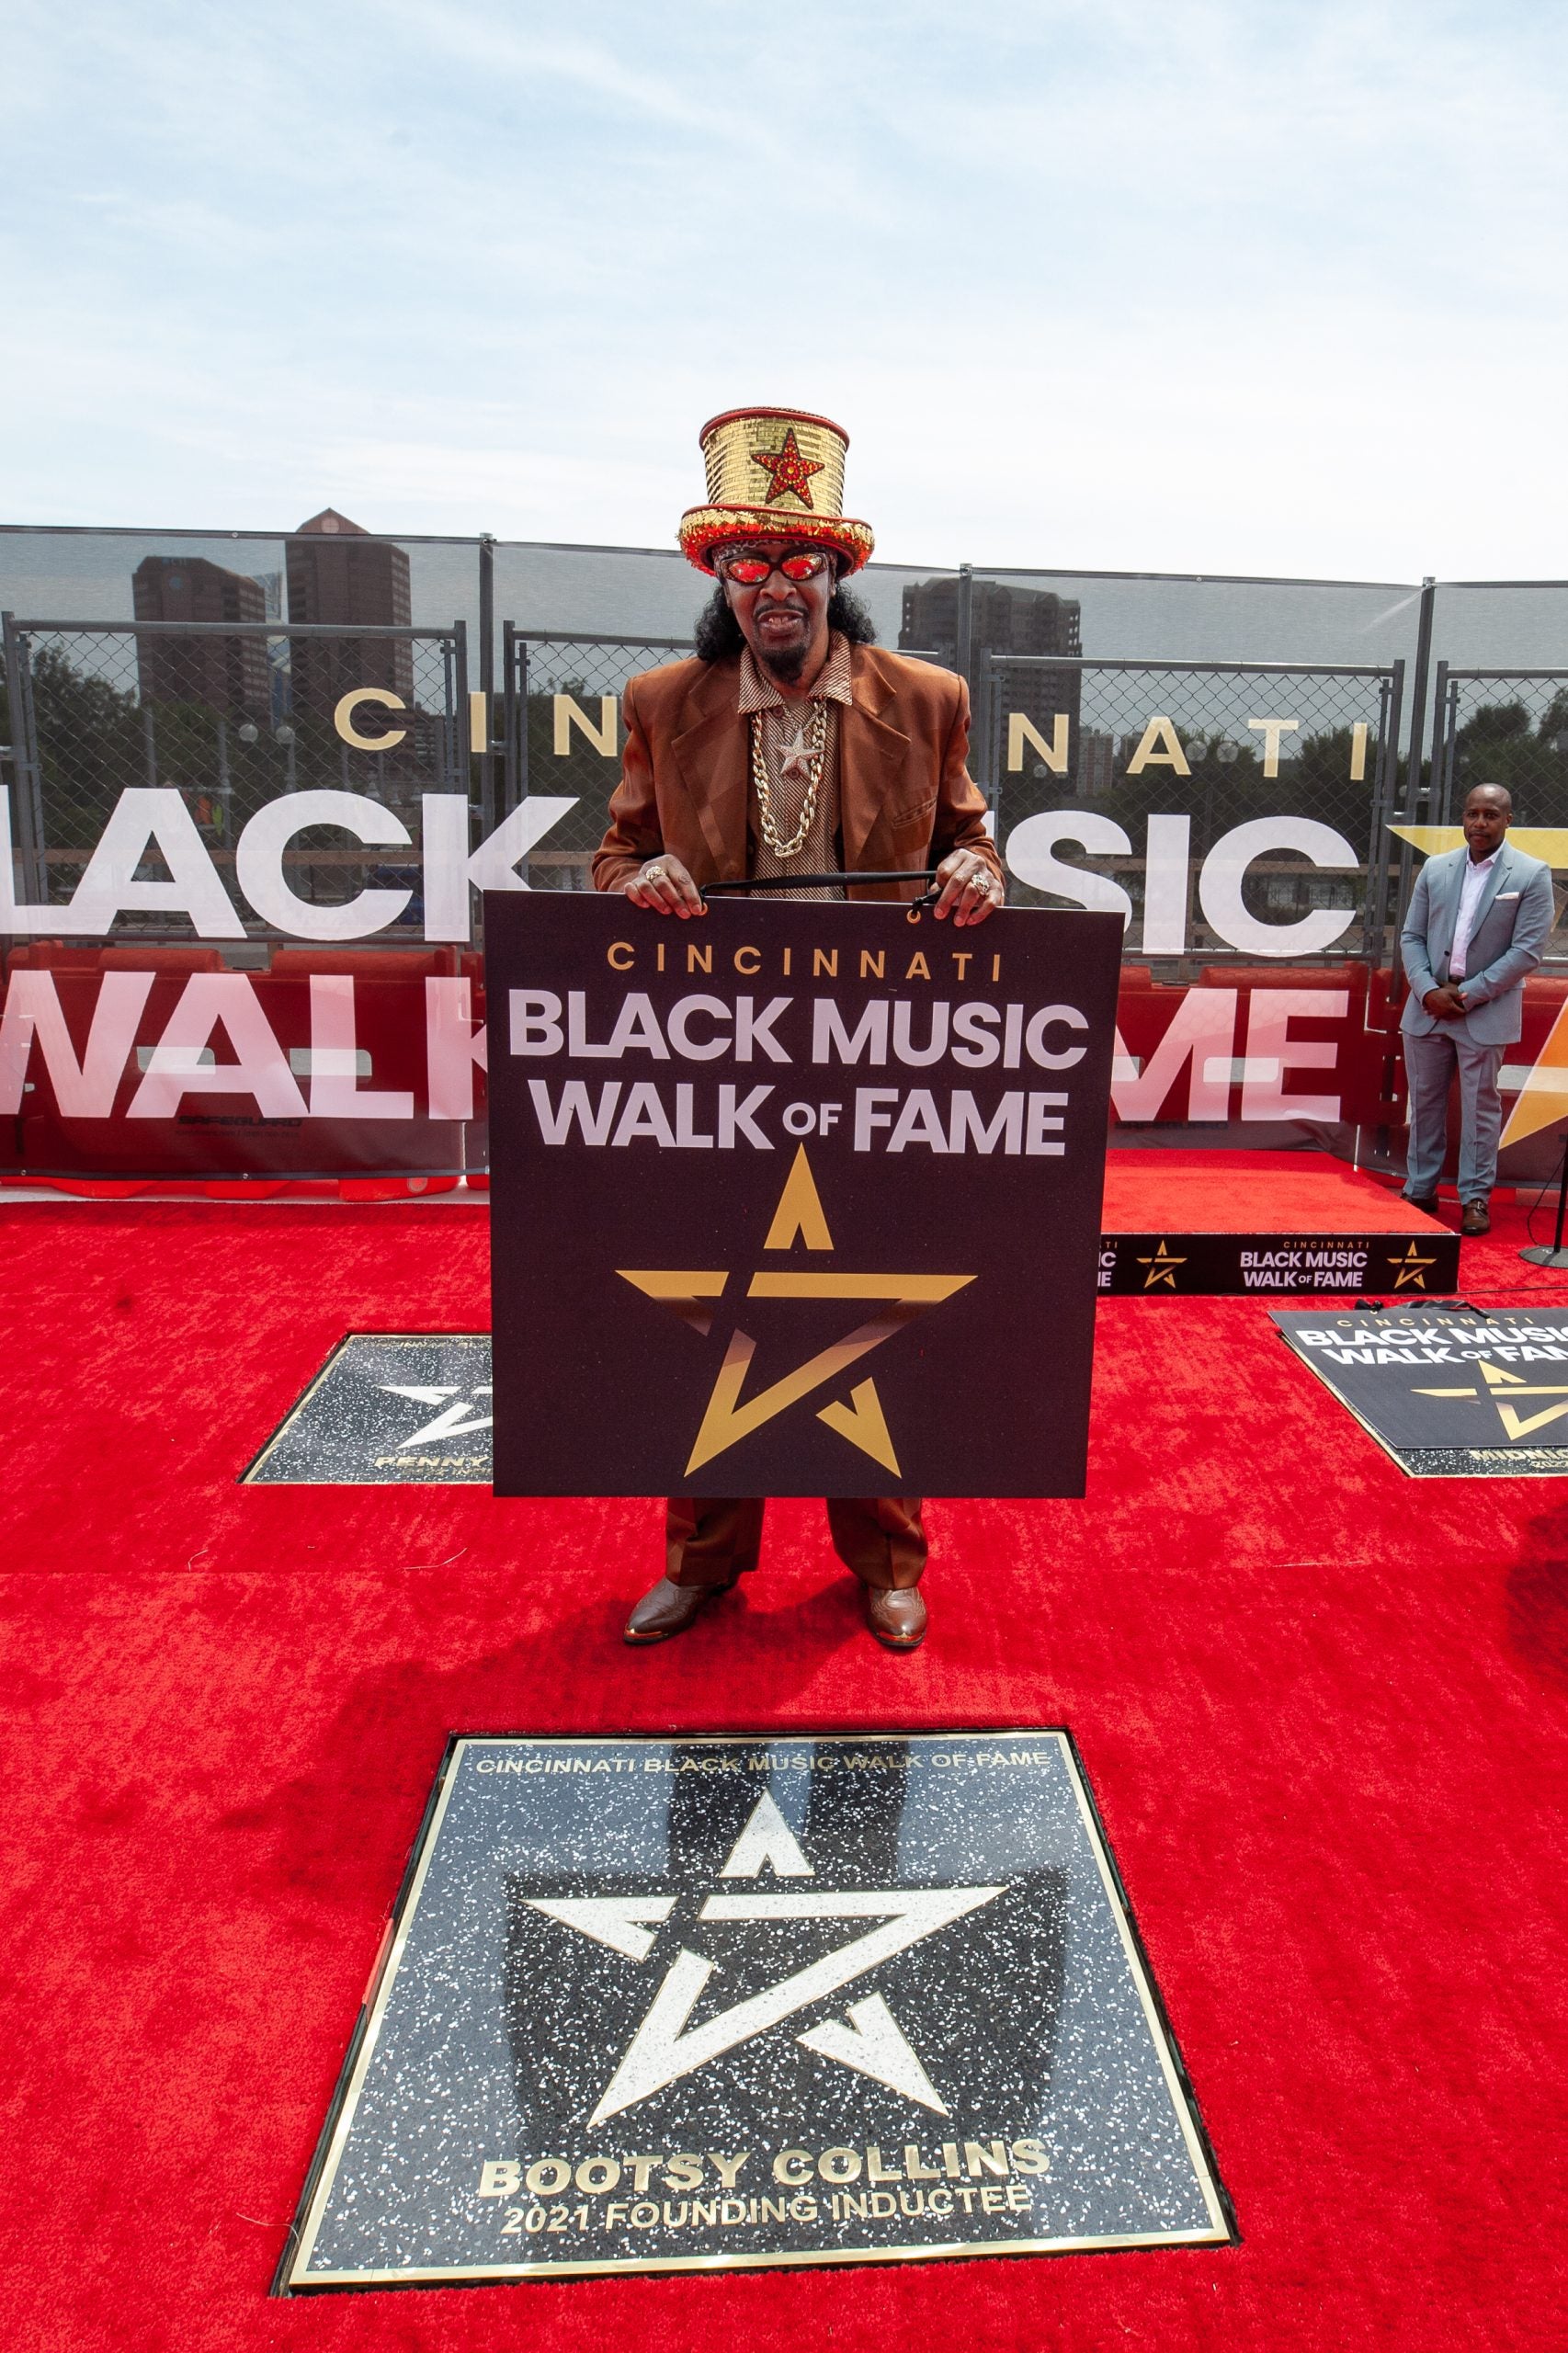 Cincinnati Celebrates Black Music And Culture At Walk Of Fame Induction Ceremony